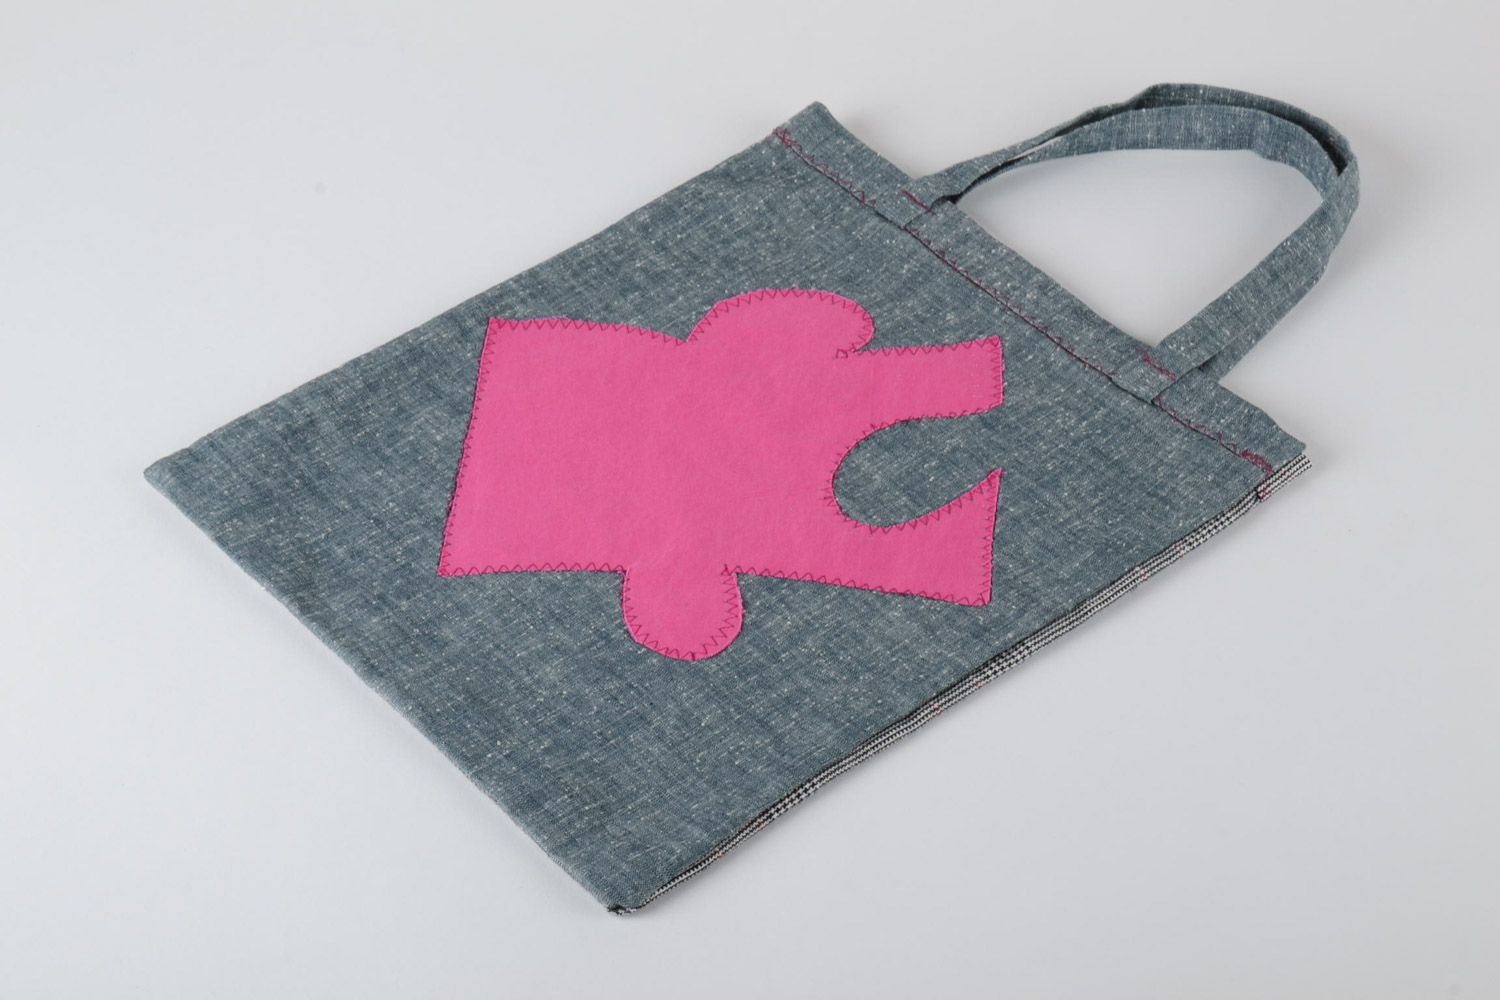 Grand sac à main cabas spacieux fait main en tissu design original dessin puzzle photo 2